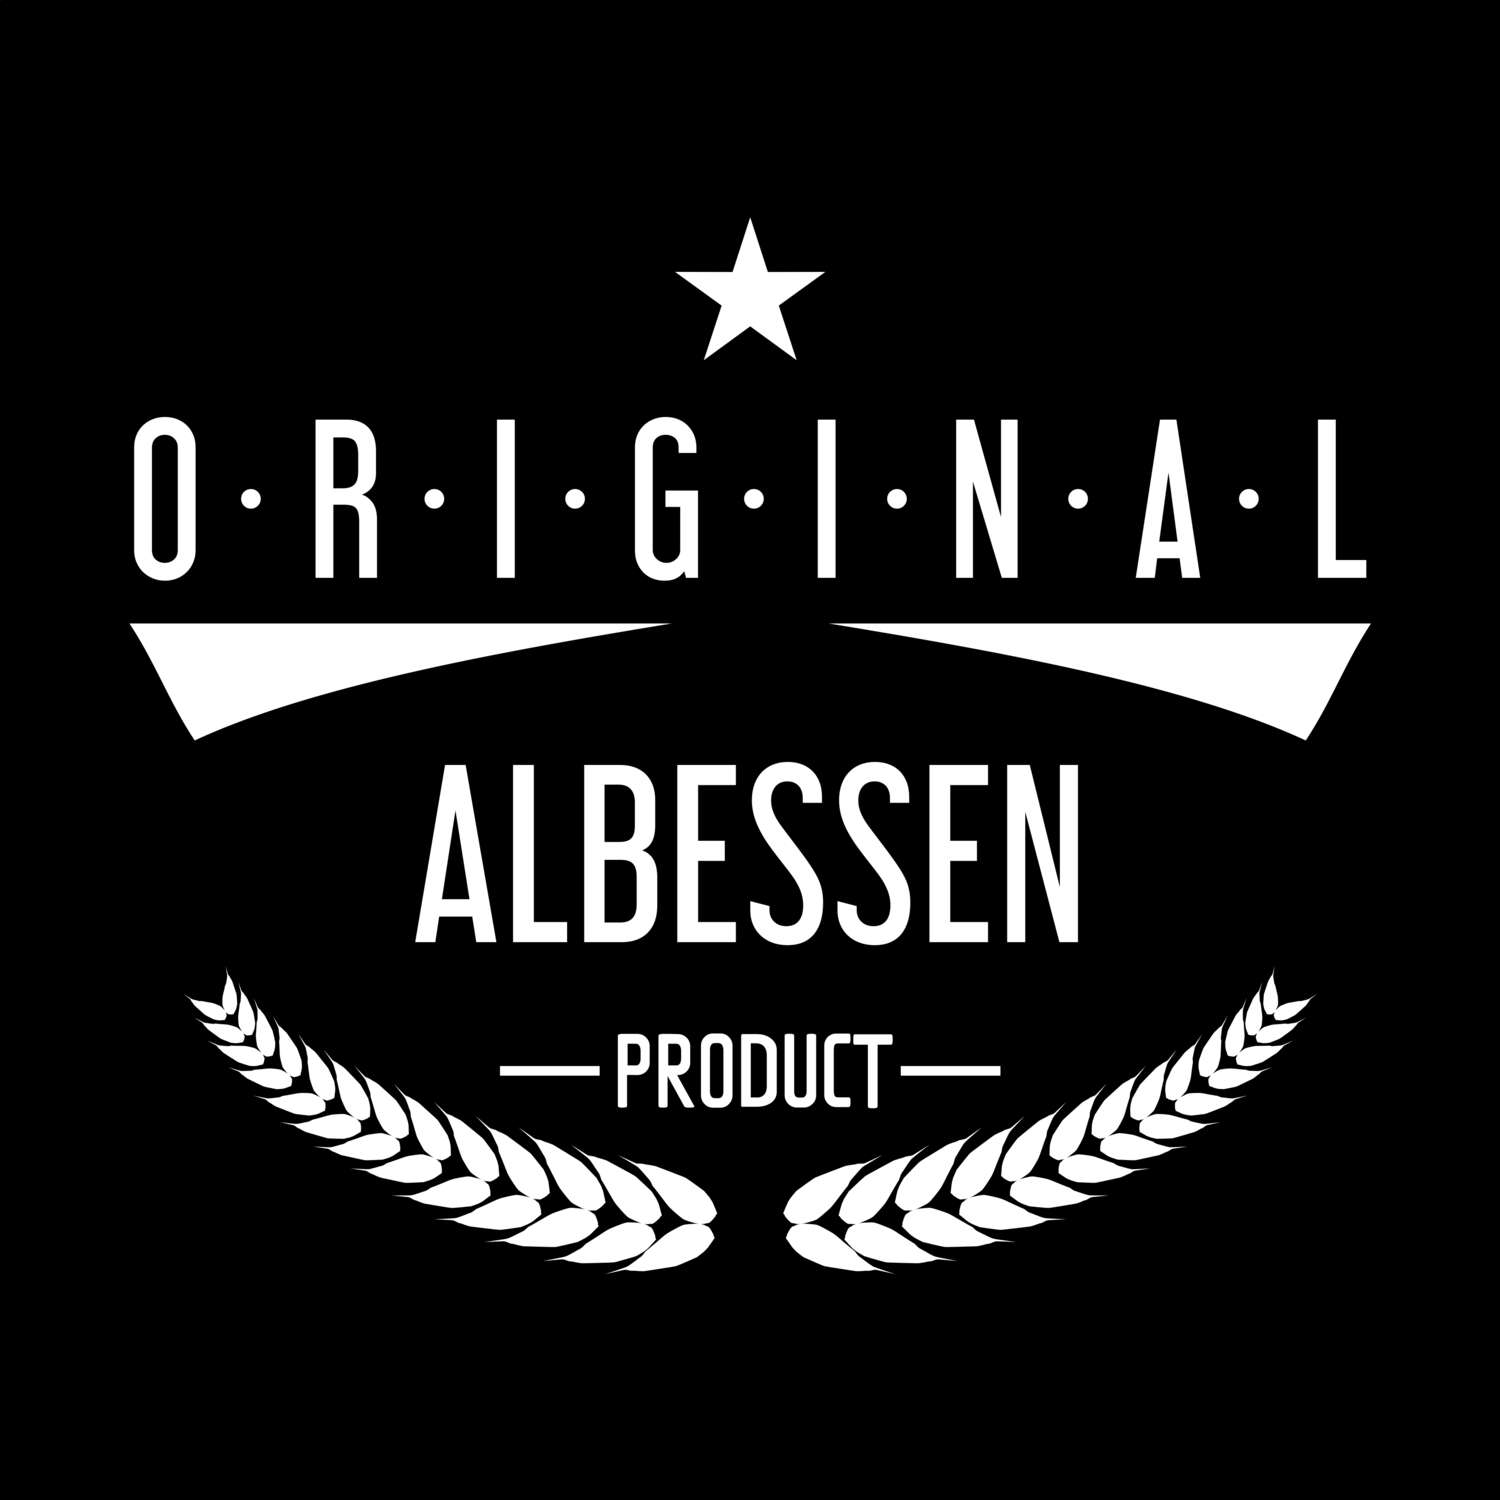 Albessen T-Shirt »Original Product«